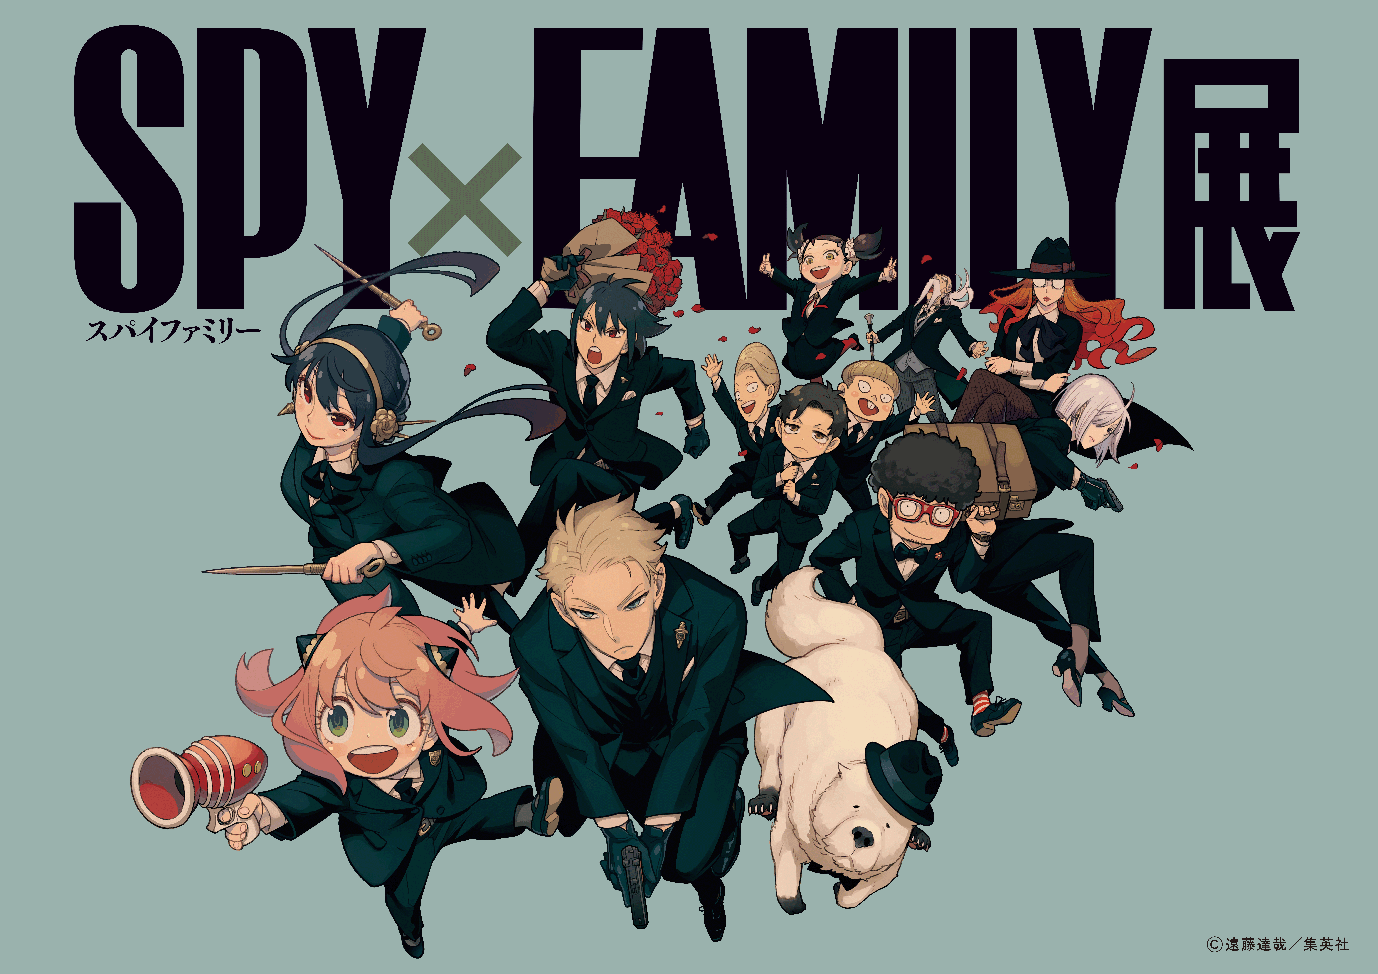 Spy x Family Season 2 Release Date Announced